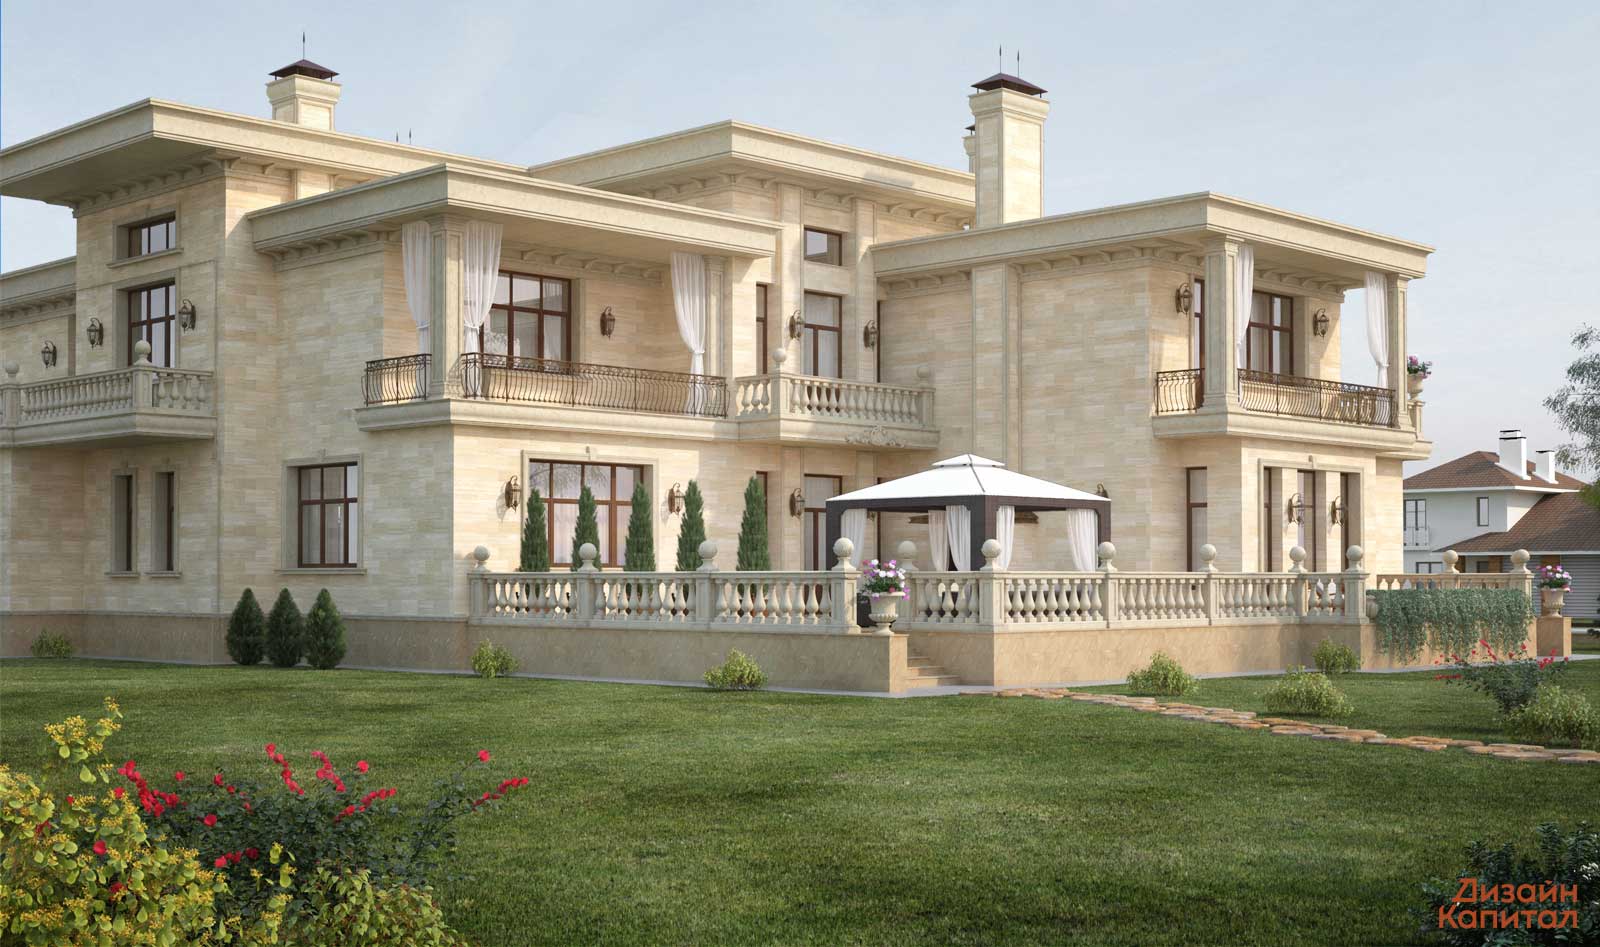 Facade design of a large mansion. travertine